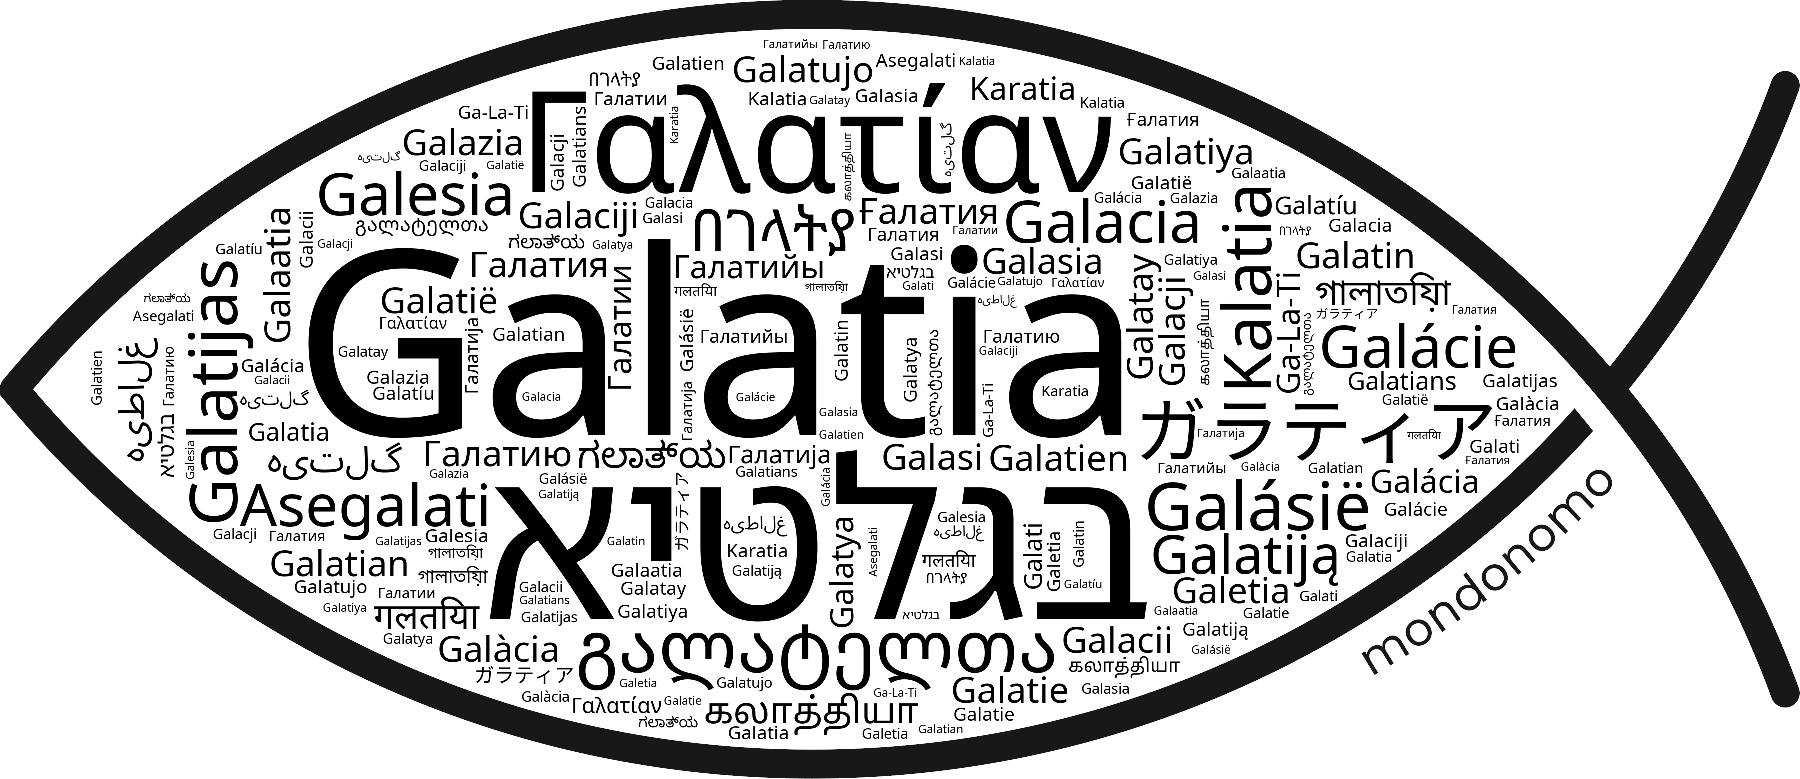 Name Galatia in the world's Bibles